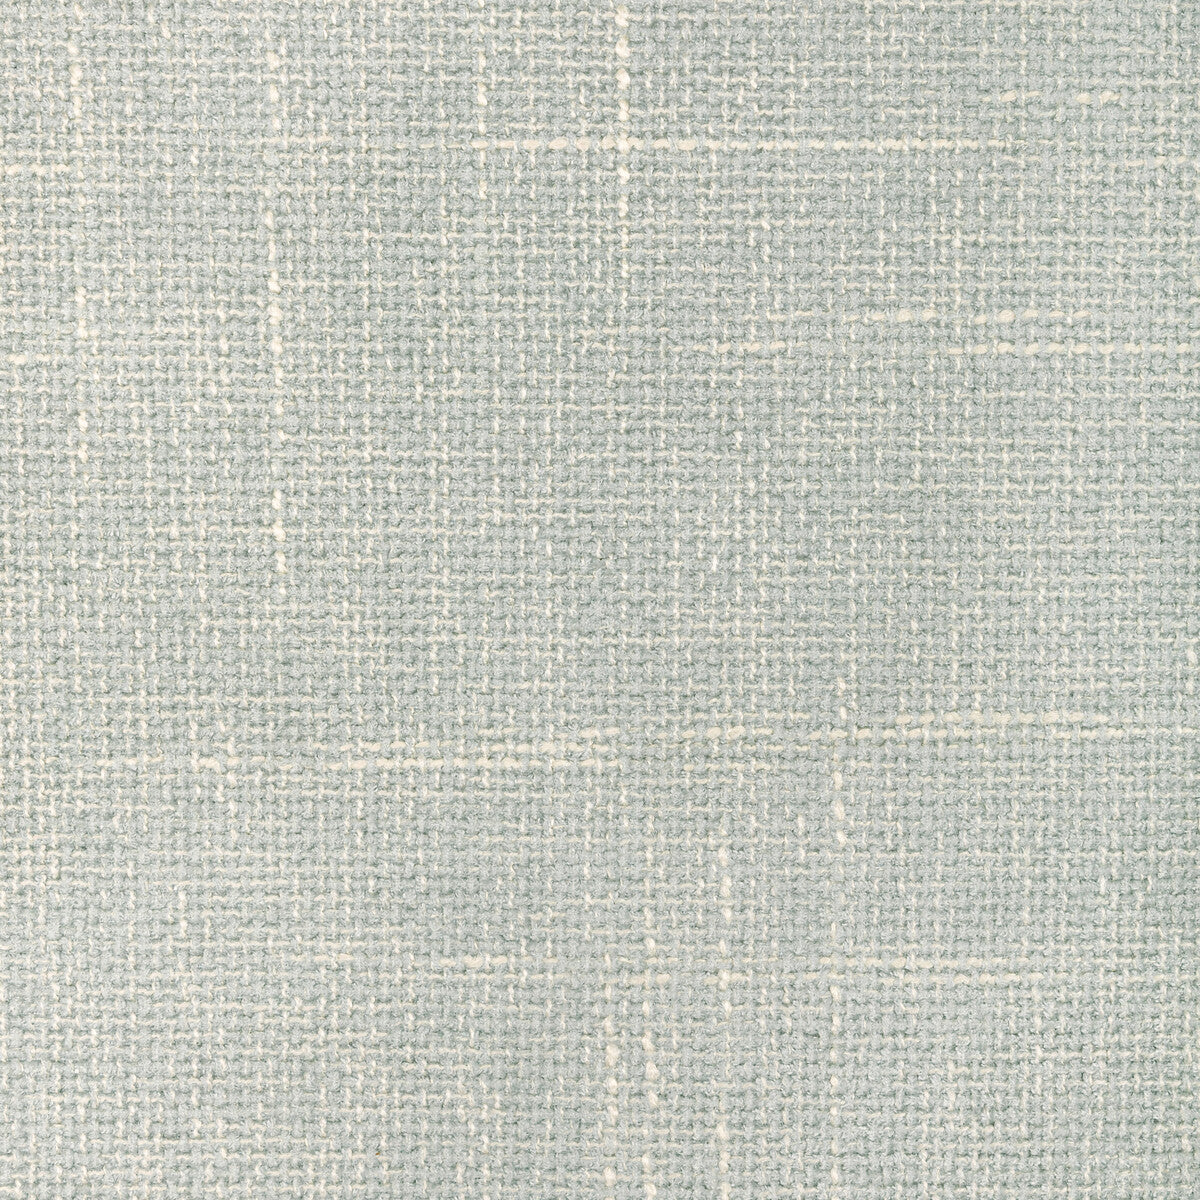 Kravet Smart fabric in 36579-35 color - pattern 36579.35.0 - by Kravet Smart in the Performance Kravetarmor collection